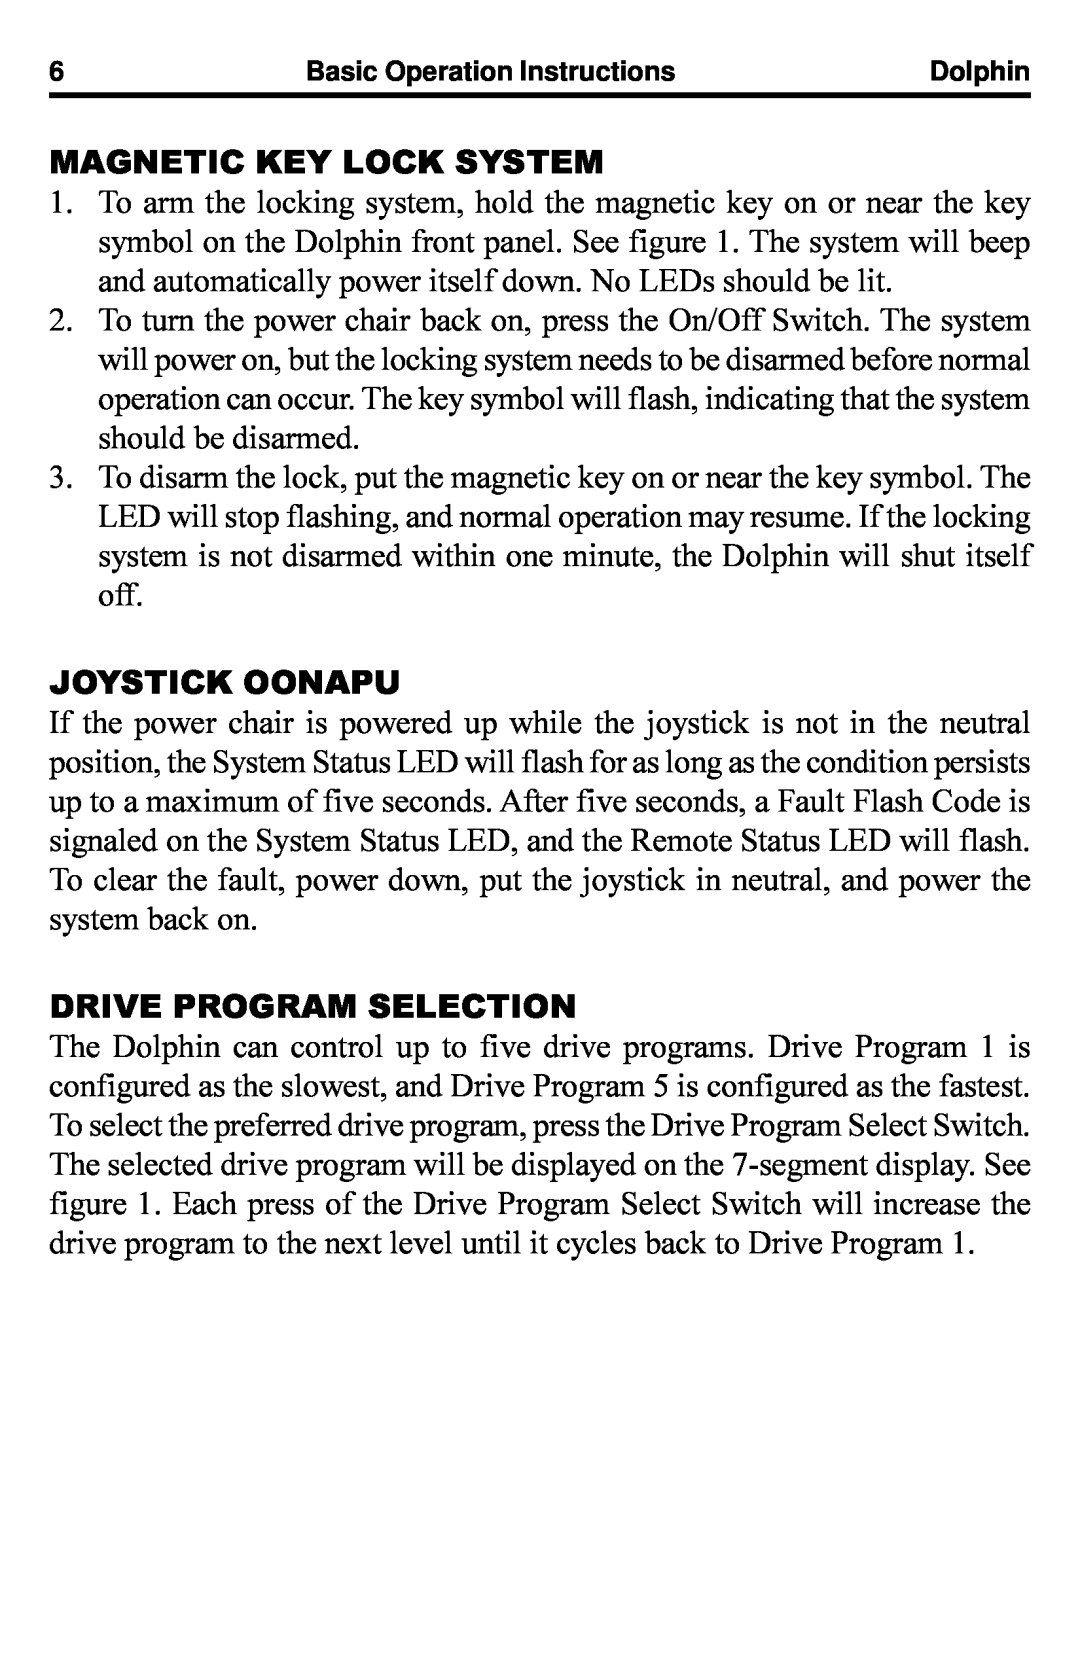 Quantum Dynamic Dolphin Remote manual Magnetic Key Lock System, Joystick Oonapu, Drive Program Selection 